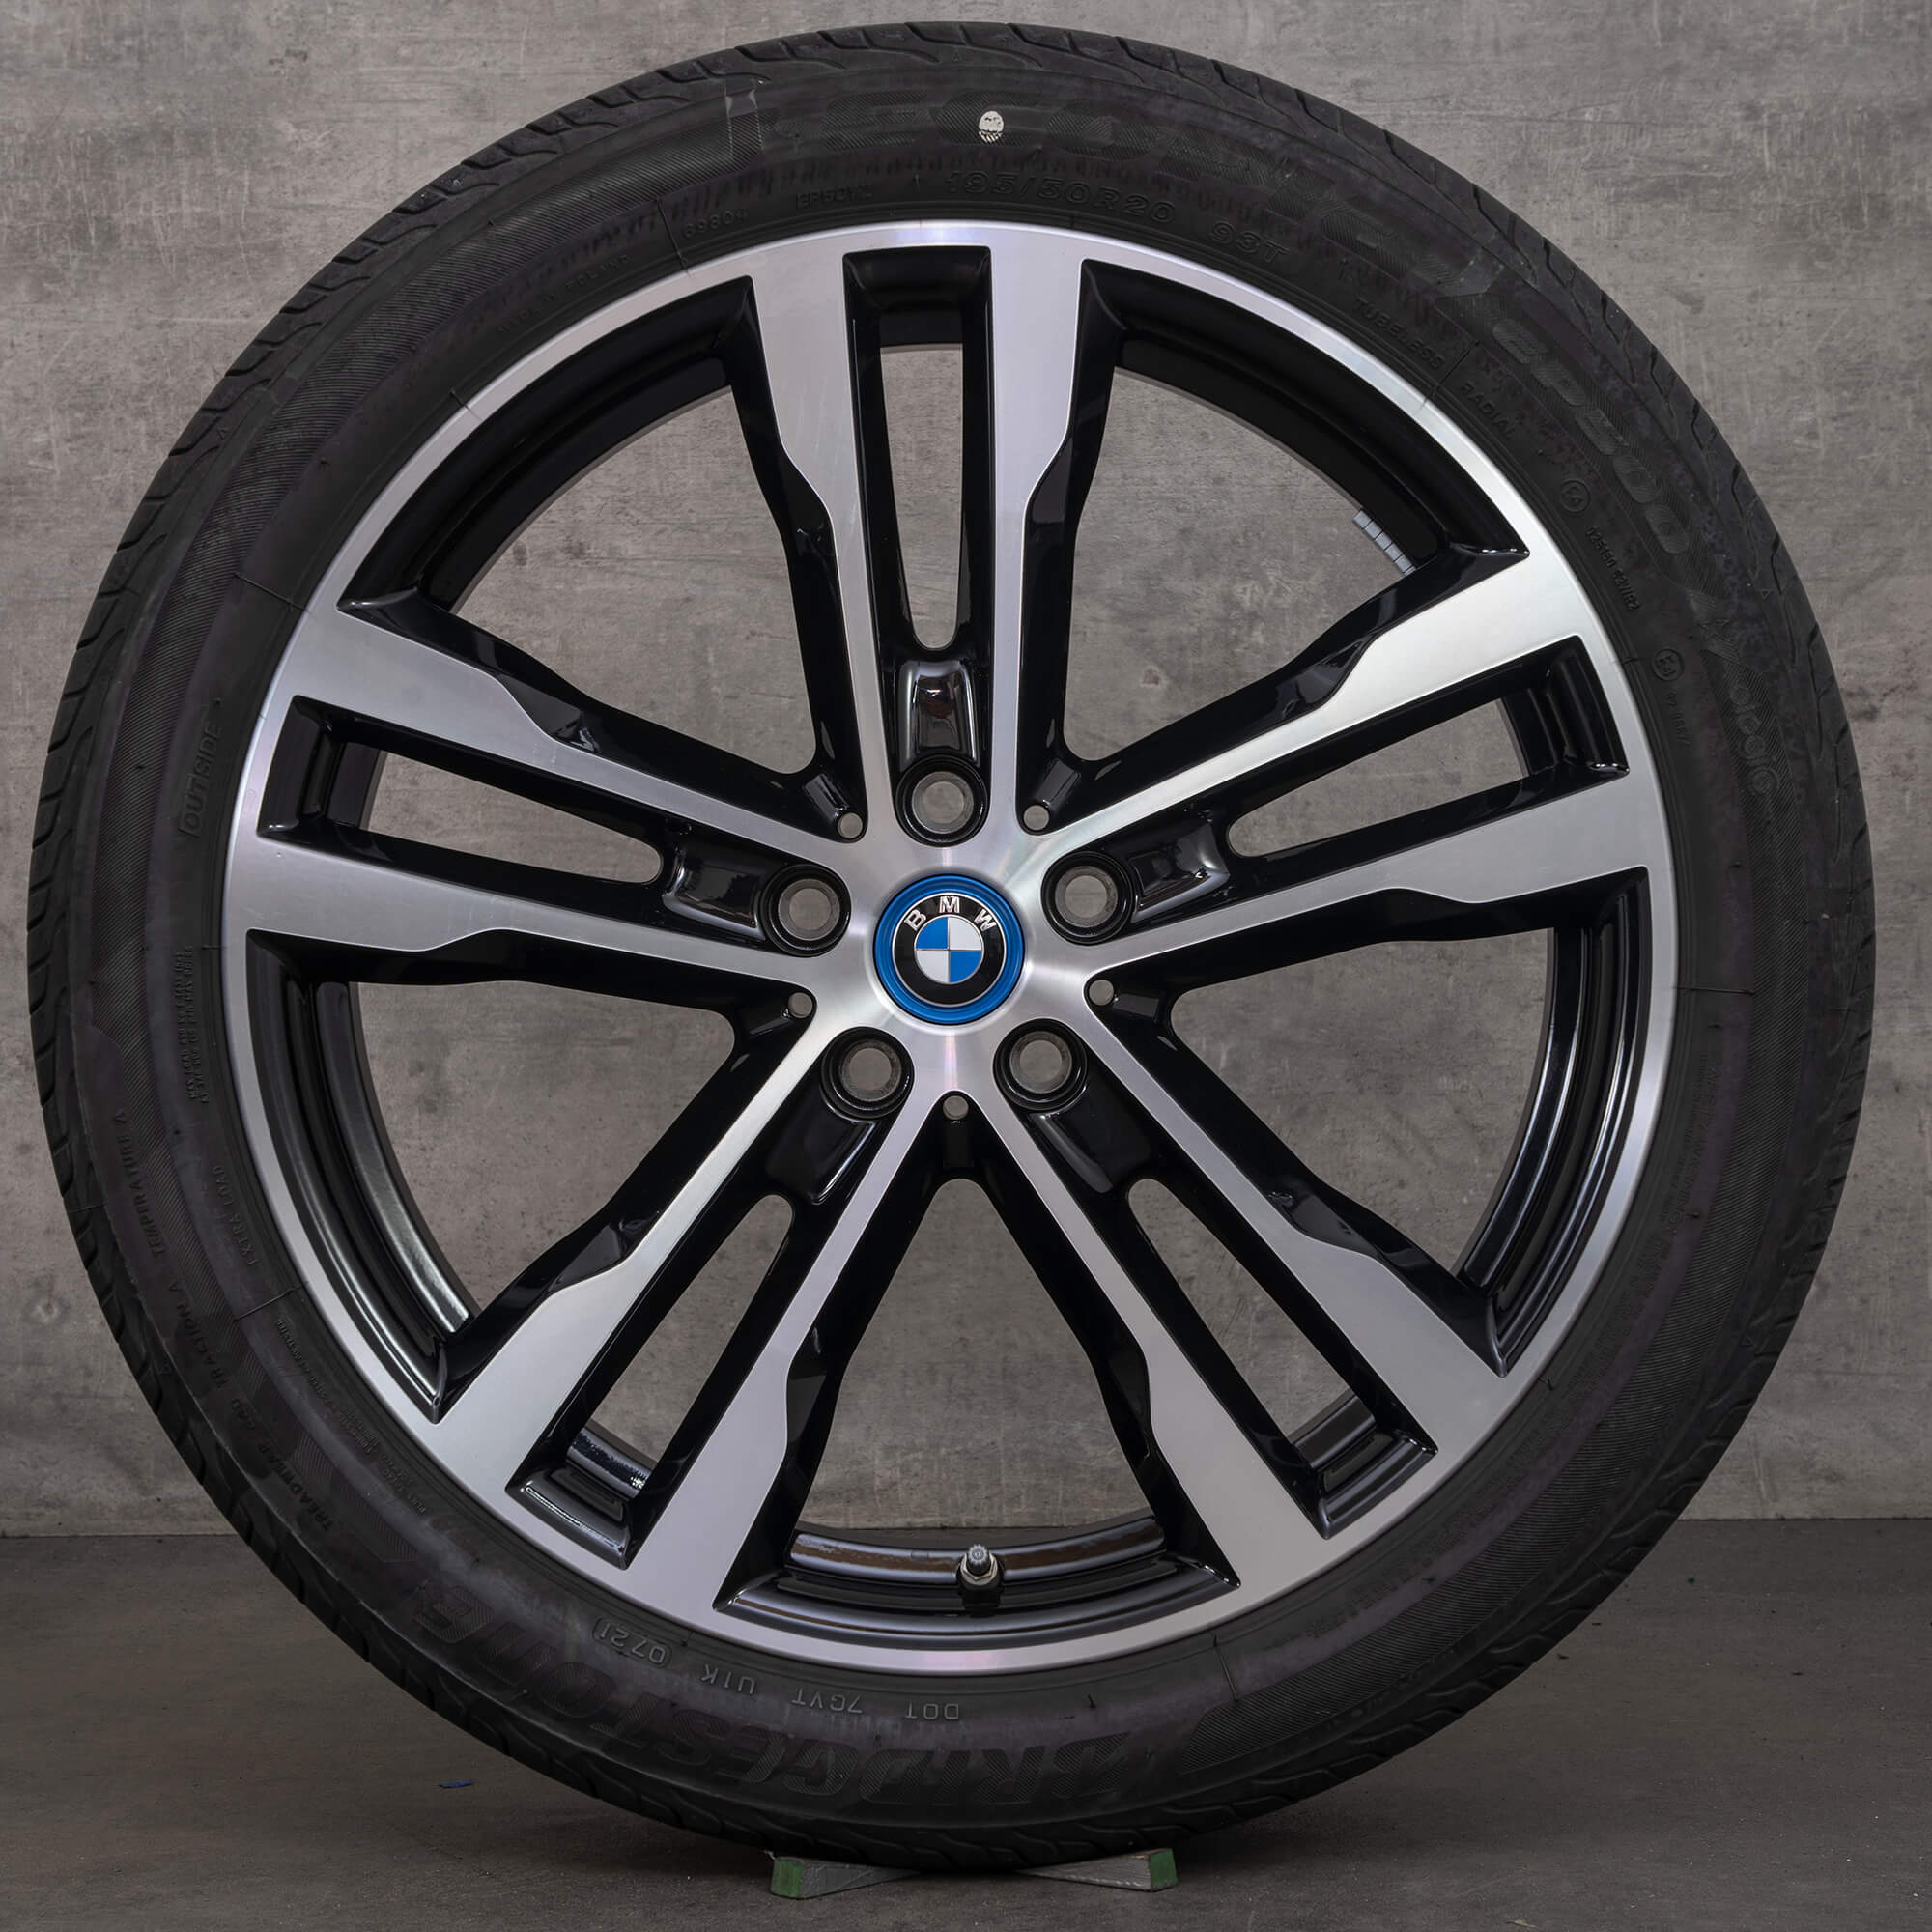 BMW 20 inch rims i-models i3s I01 summer tires wheels 6 mm